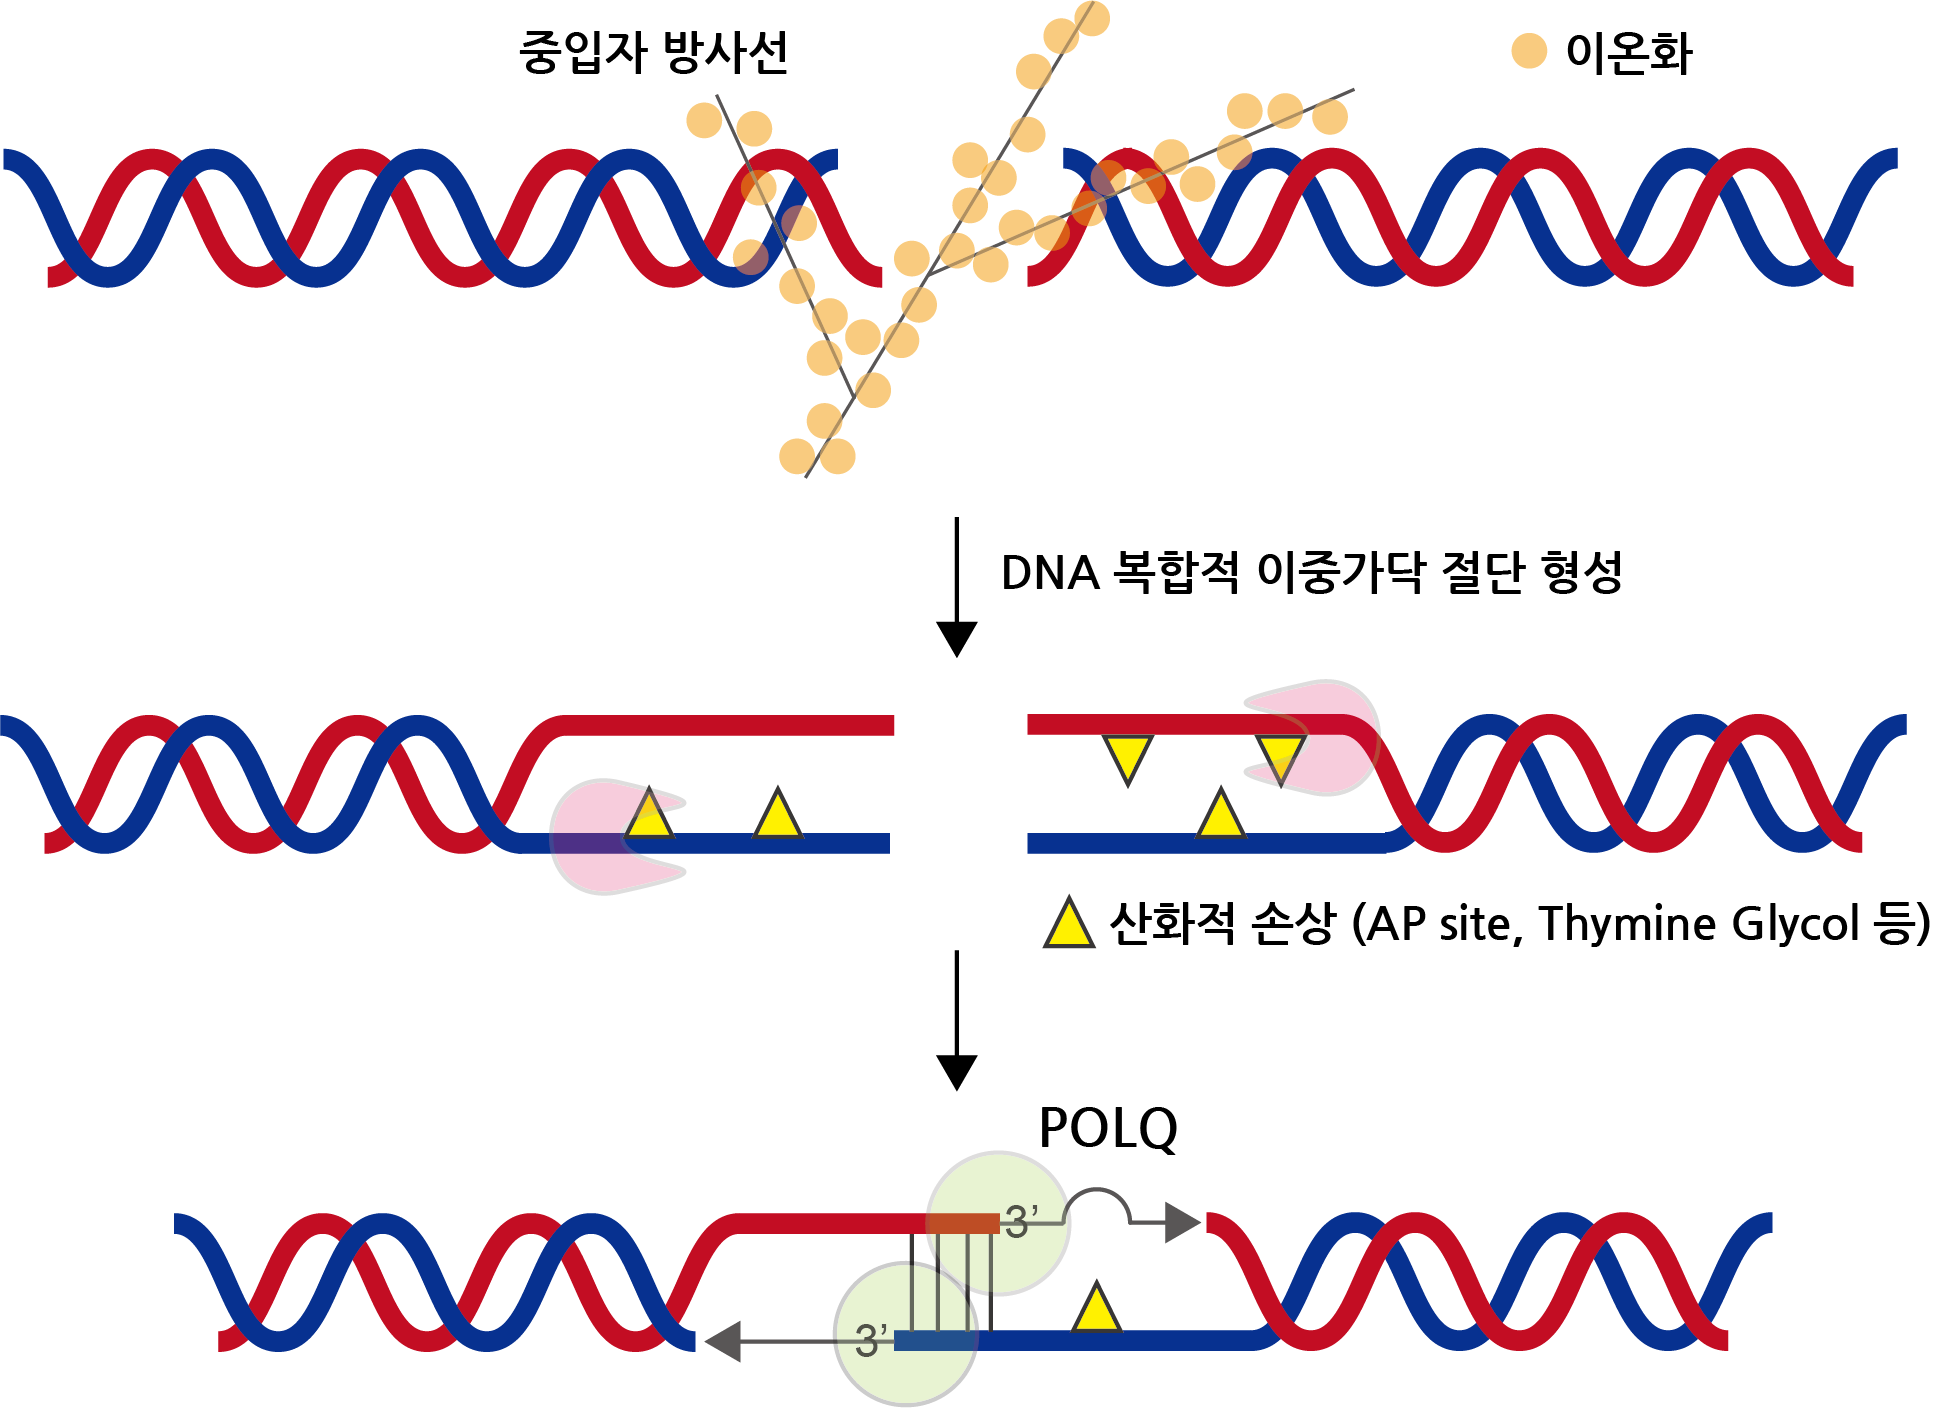 ▲ POLQ 단백질의 DNA 복합적 이중가닥 절단 복구 모식도